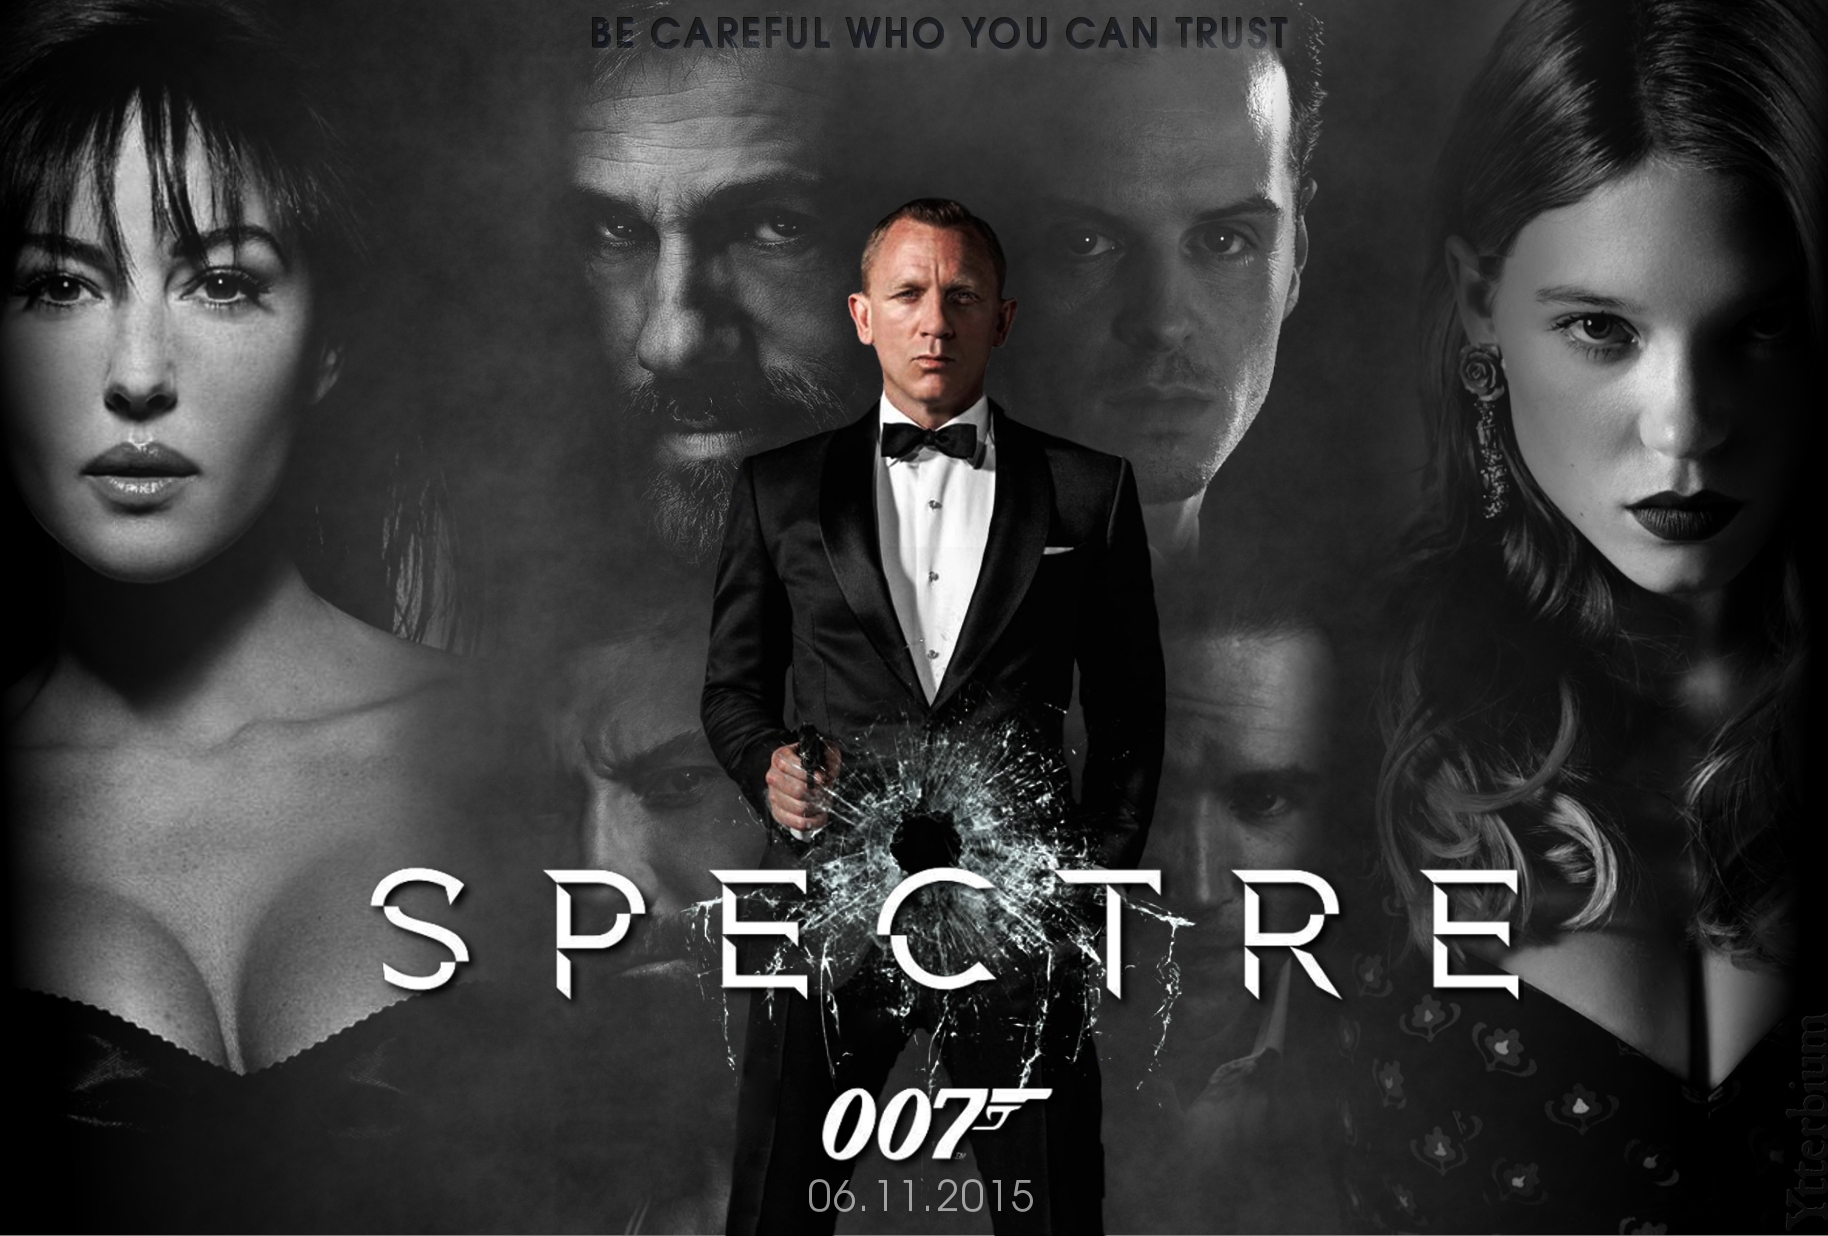 cast of bond film spectre